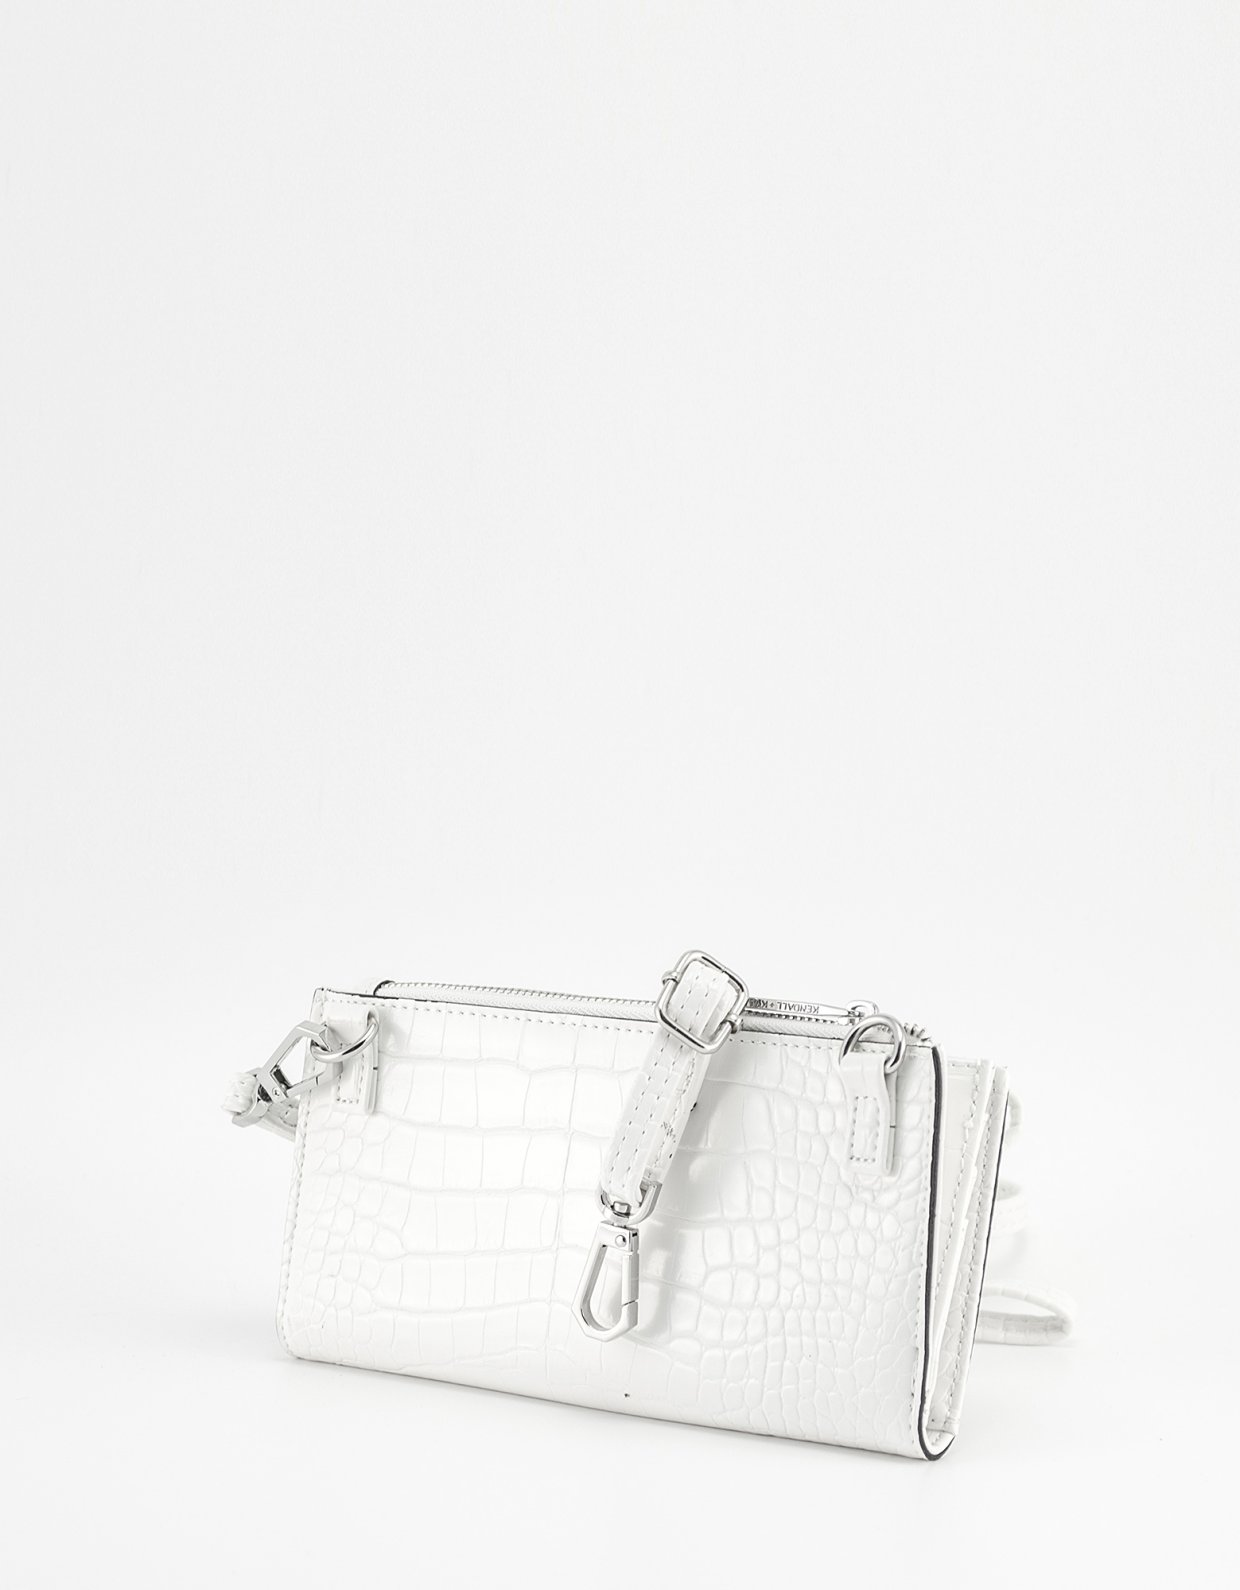 Kendall + Kylie Malibu wallet crossbody white